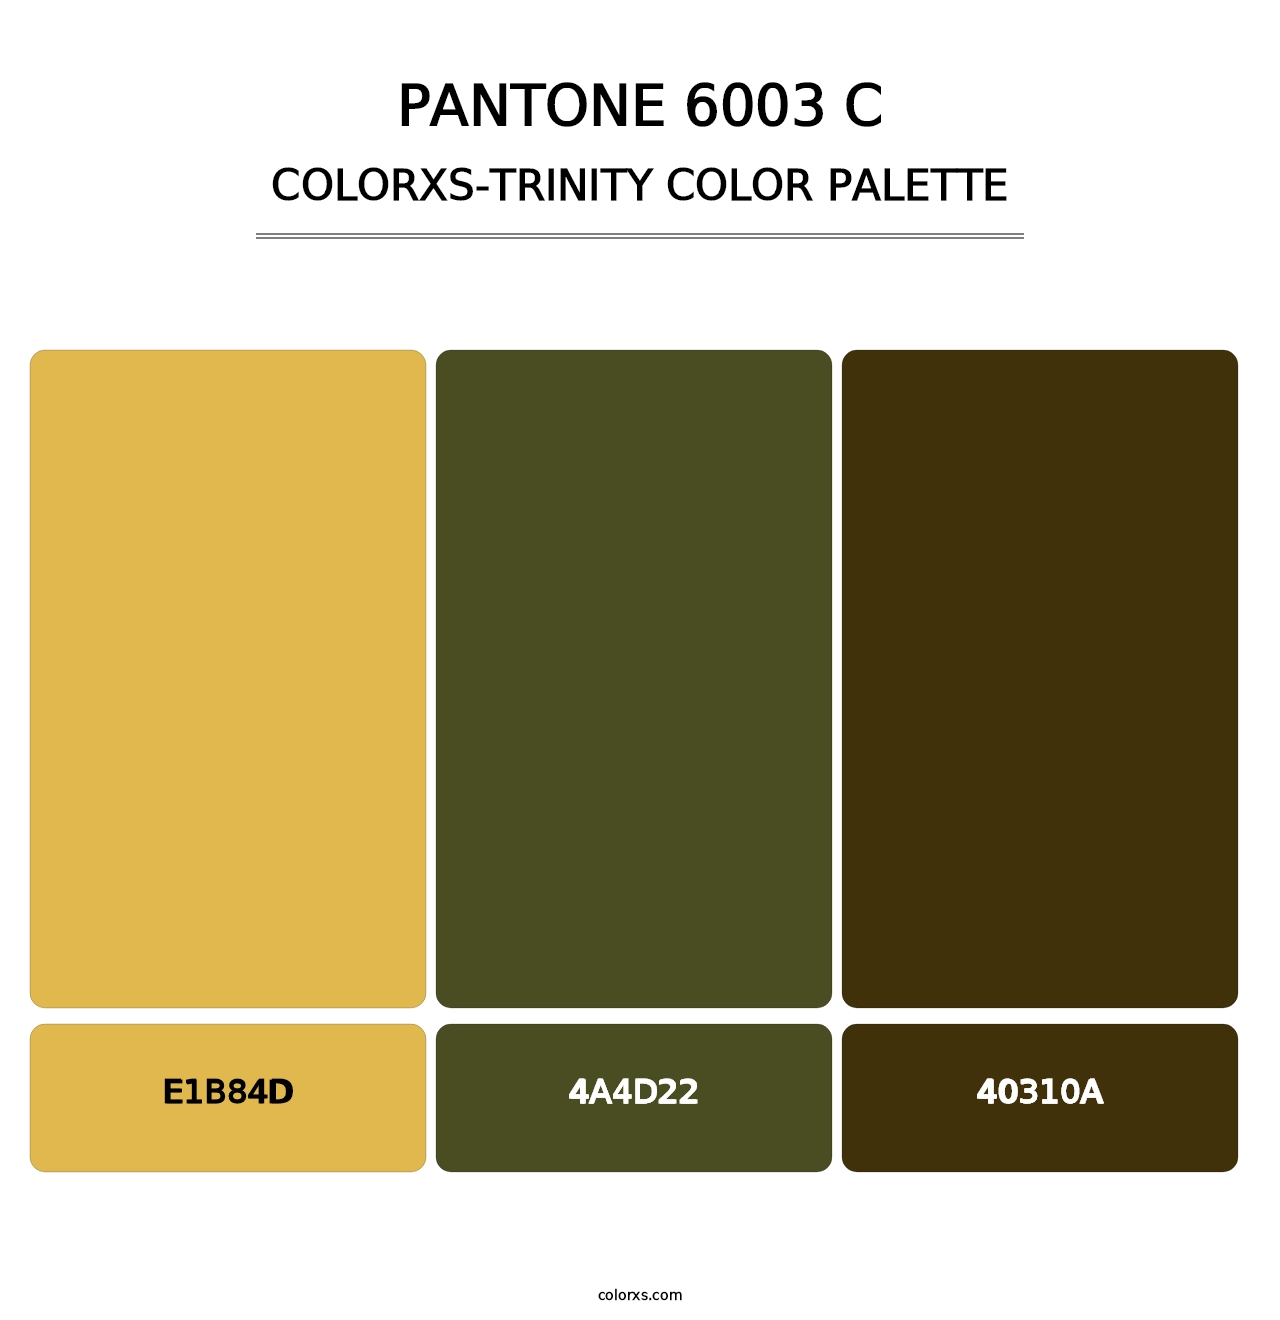 PANTONE 6003 C - Colorxs Trinity Palette